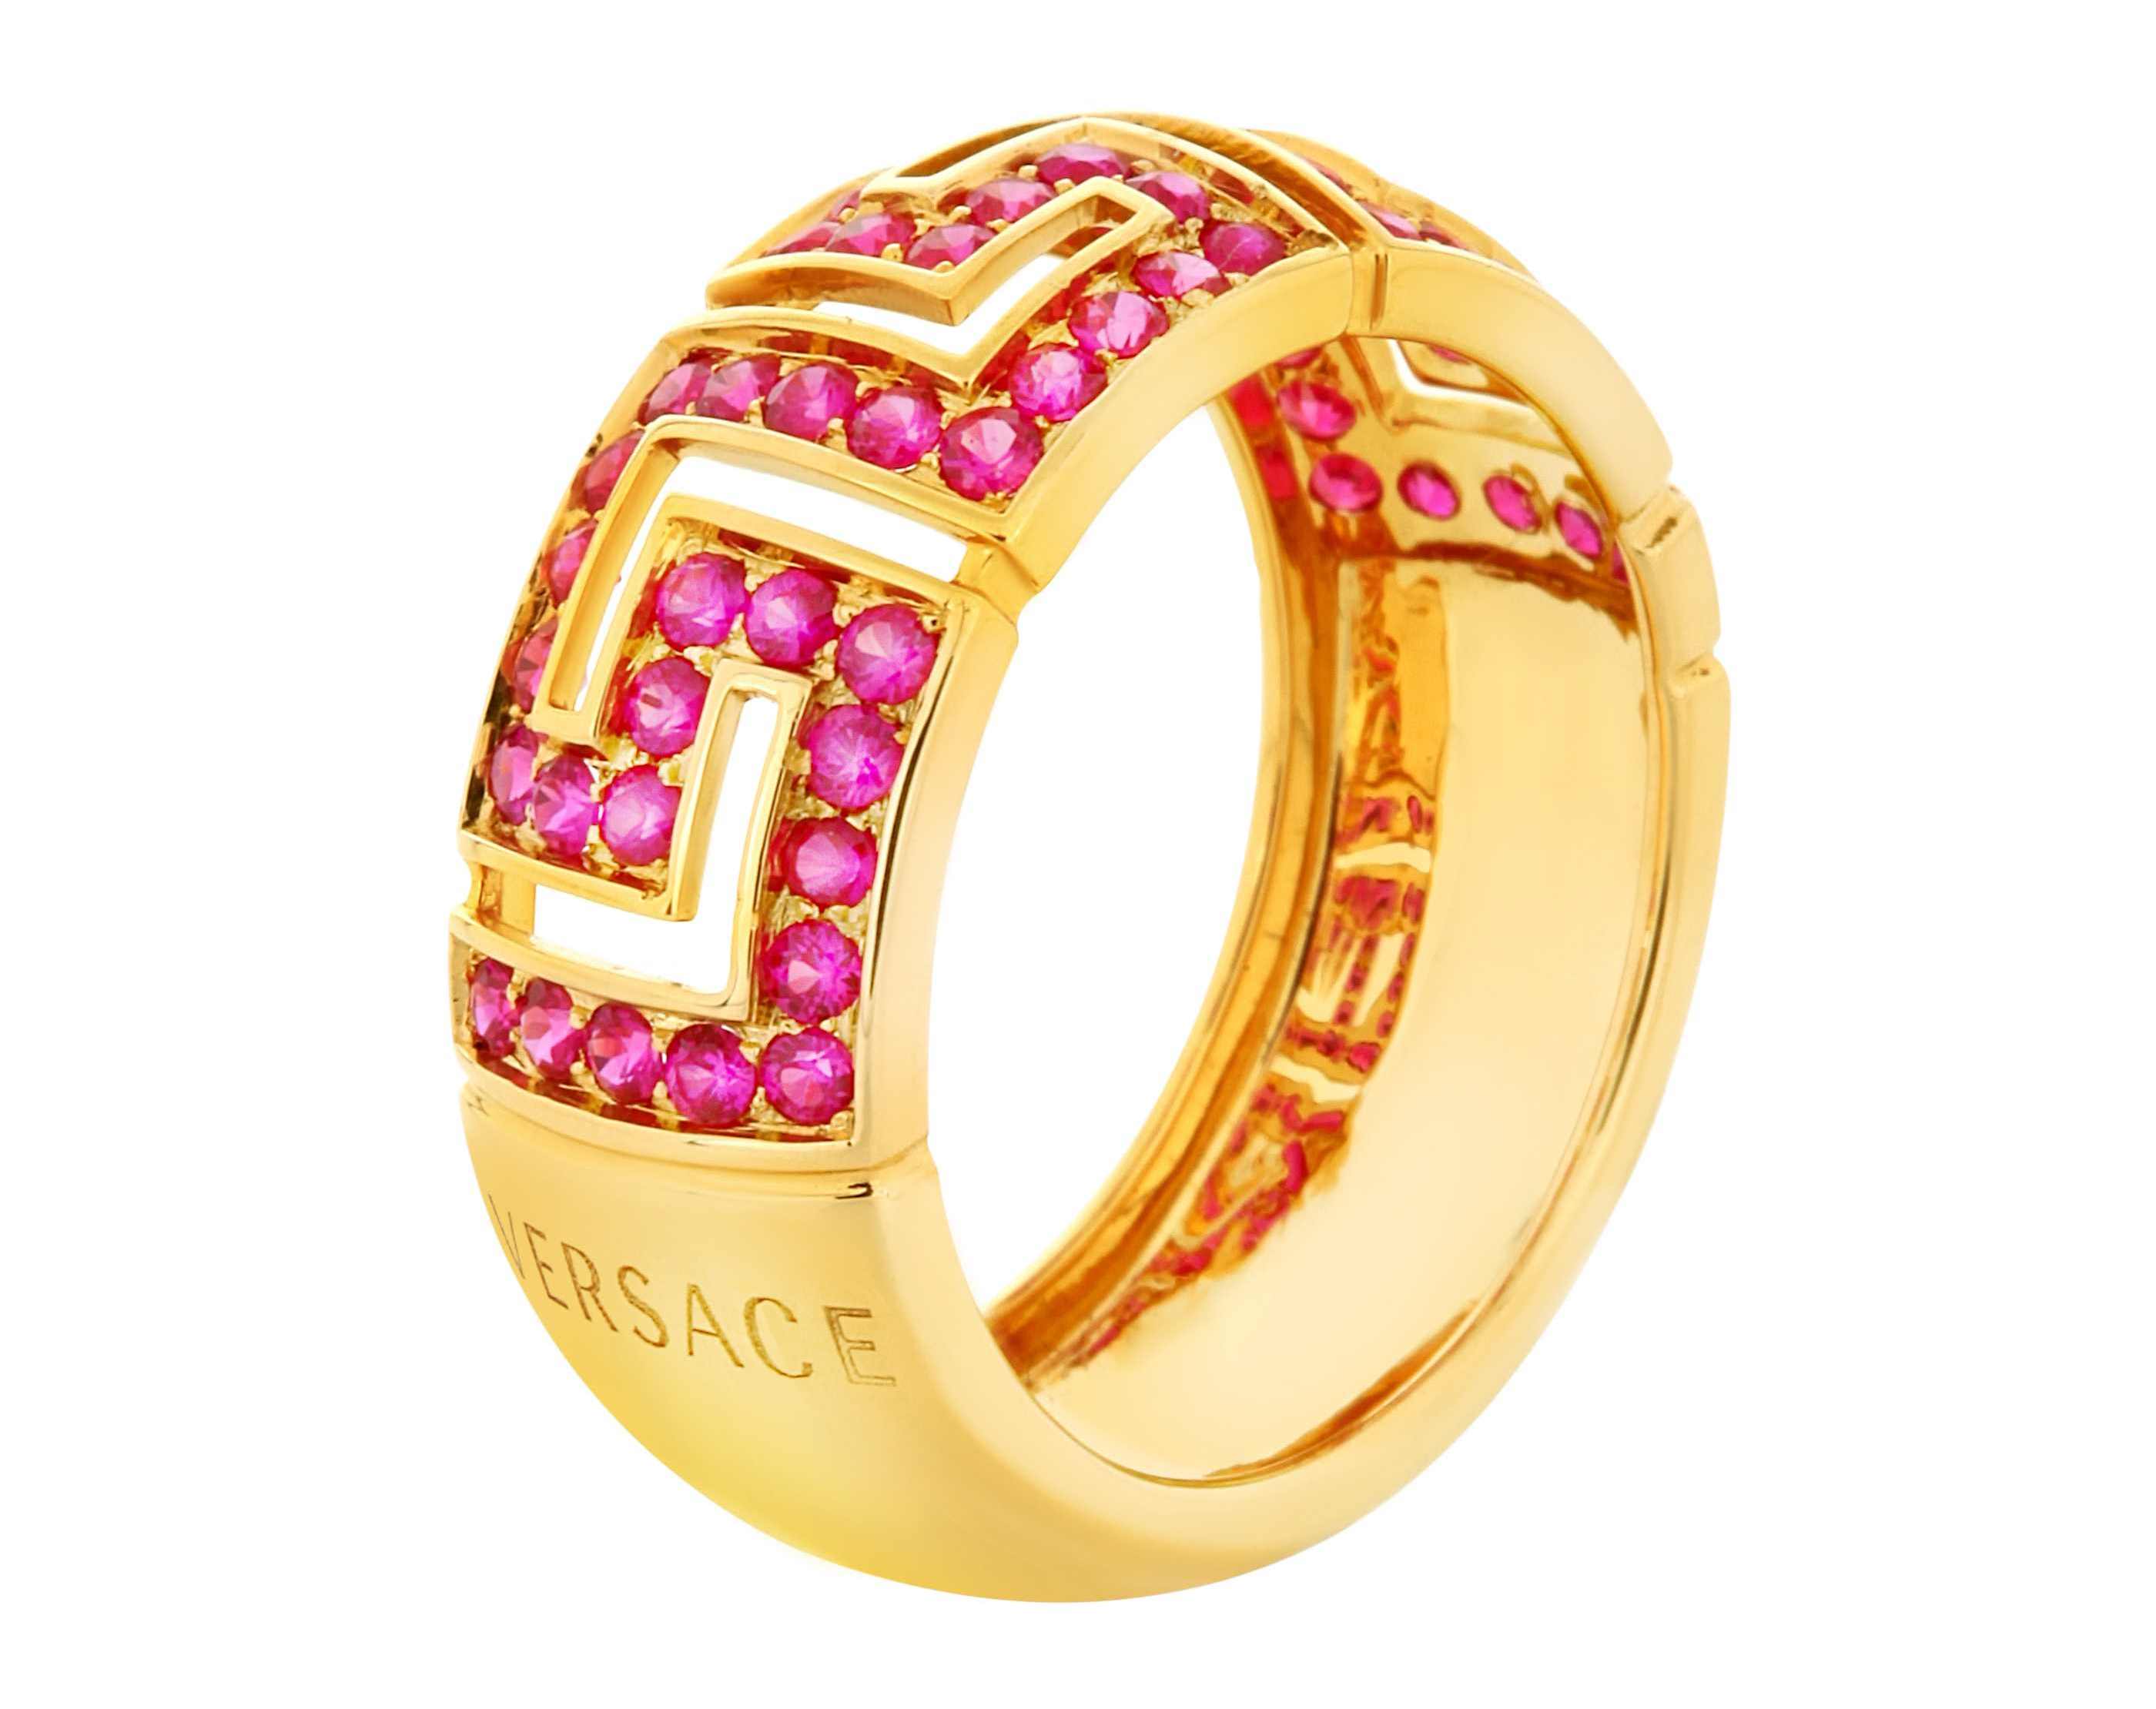 Versace Greca Red Rubies ring